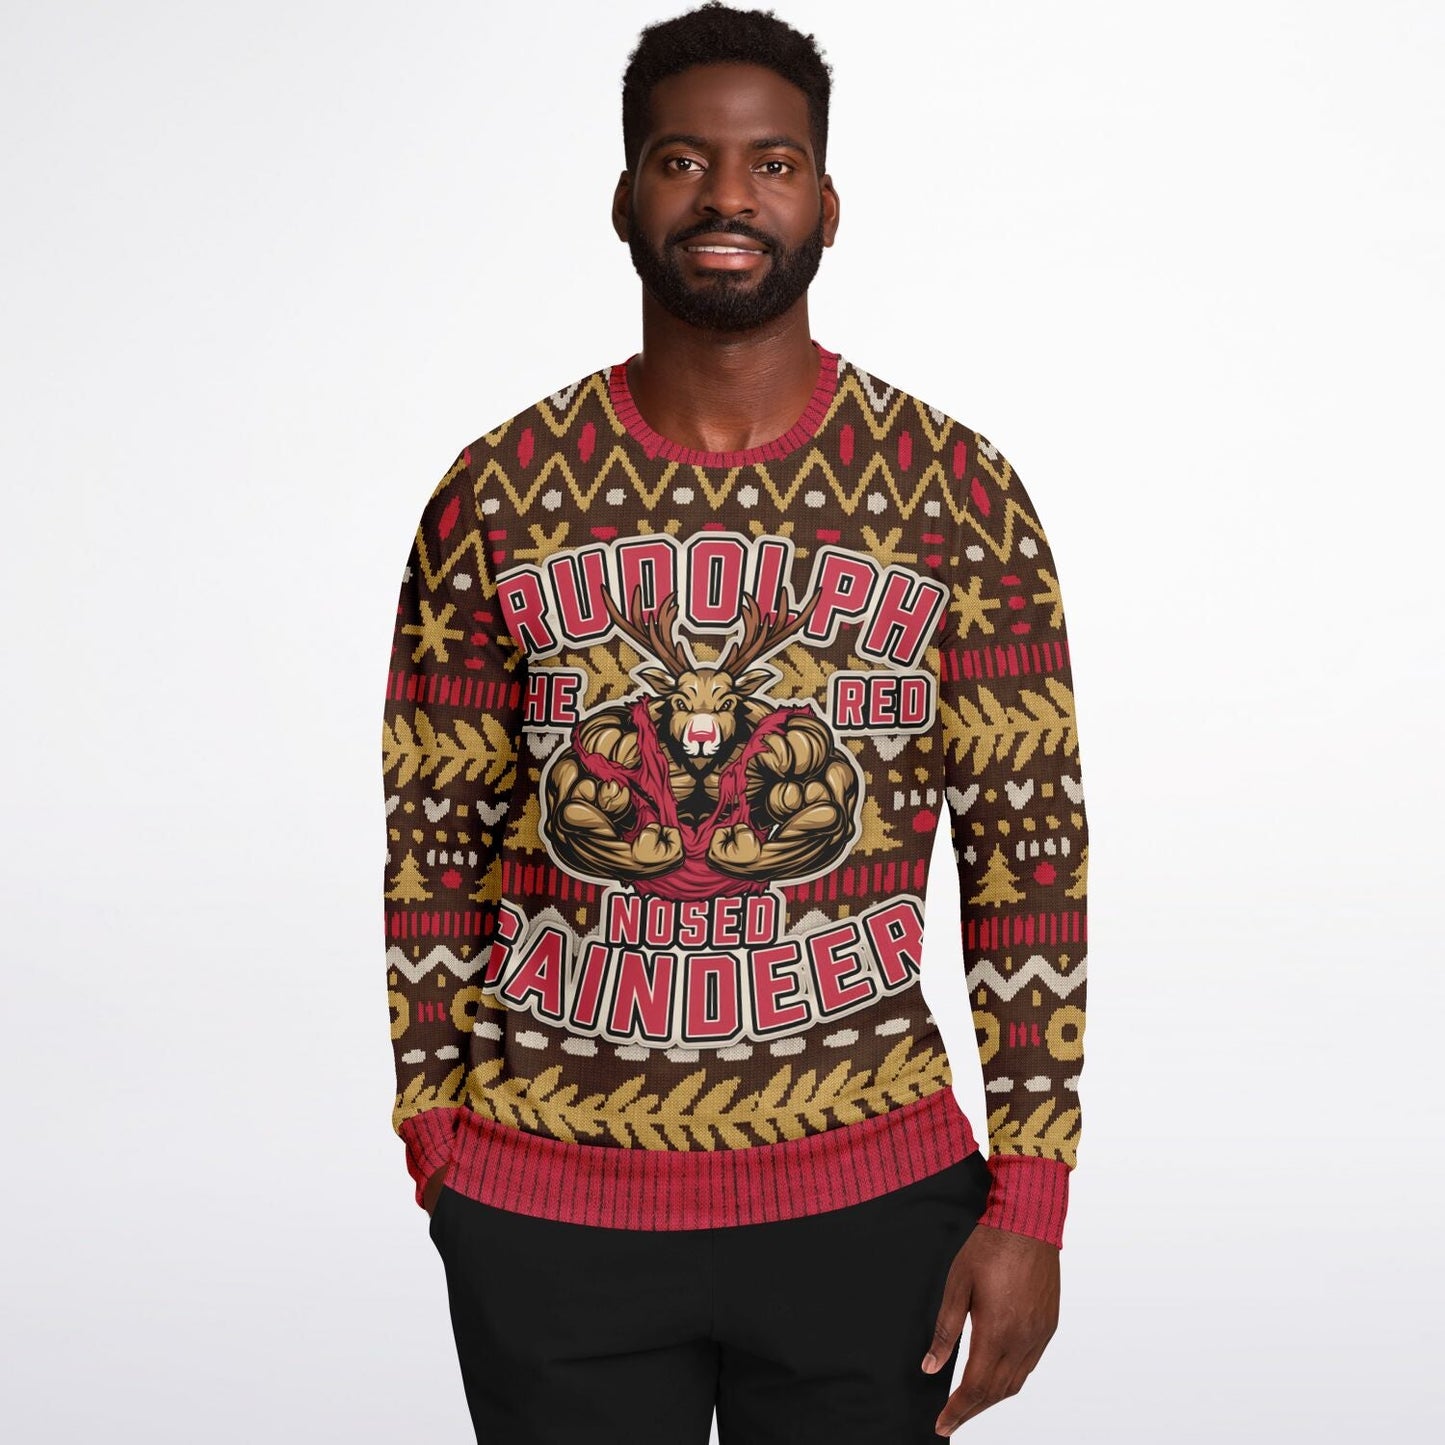 Rudolph the Red Nosed Gaindeer Ugly Christmas Sweatshirt Fashion Sweatshirt - AOP Subliminator 